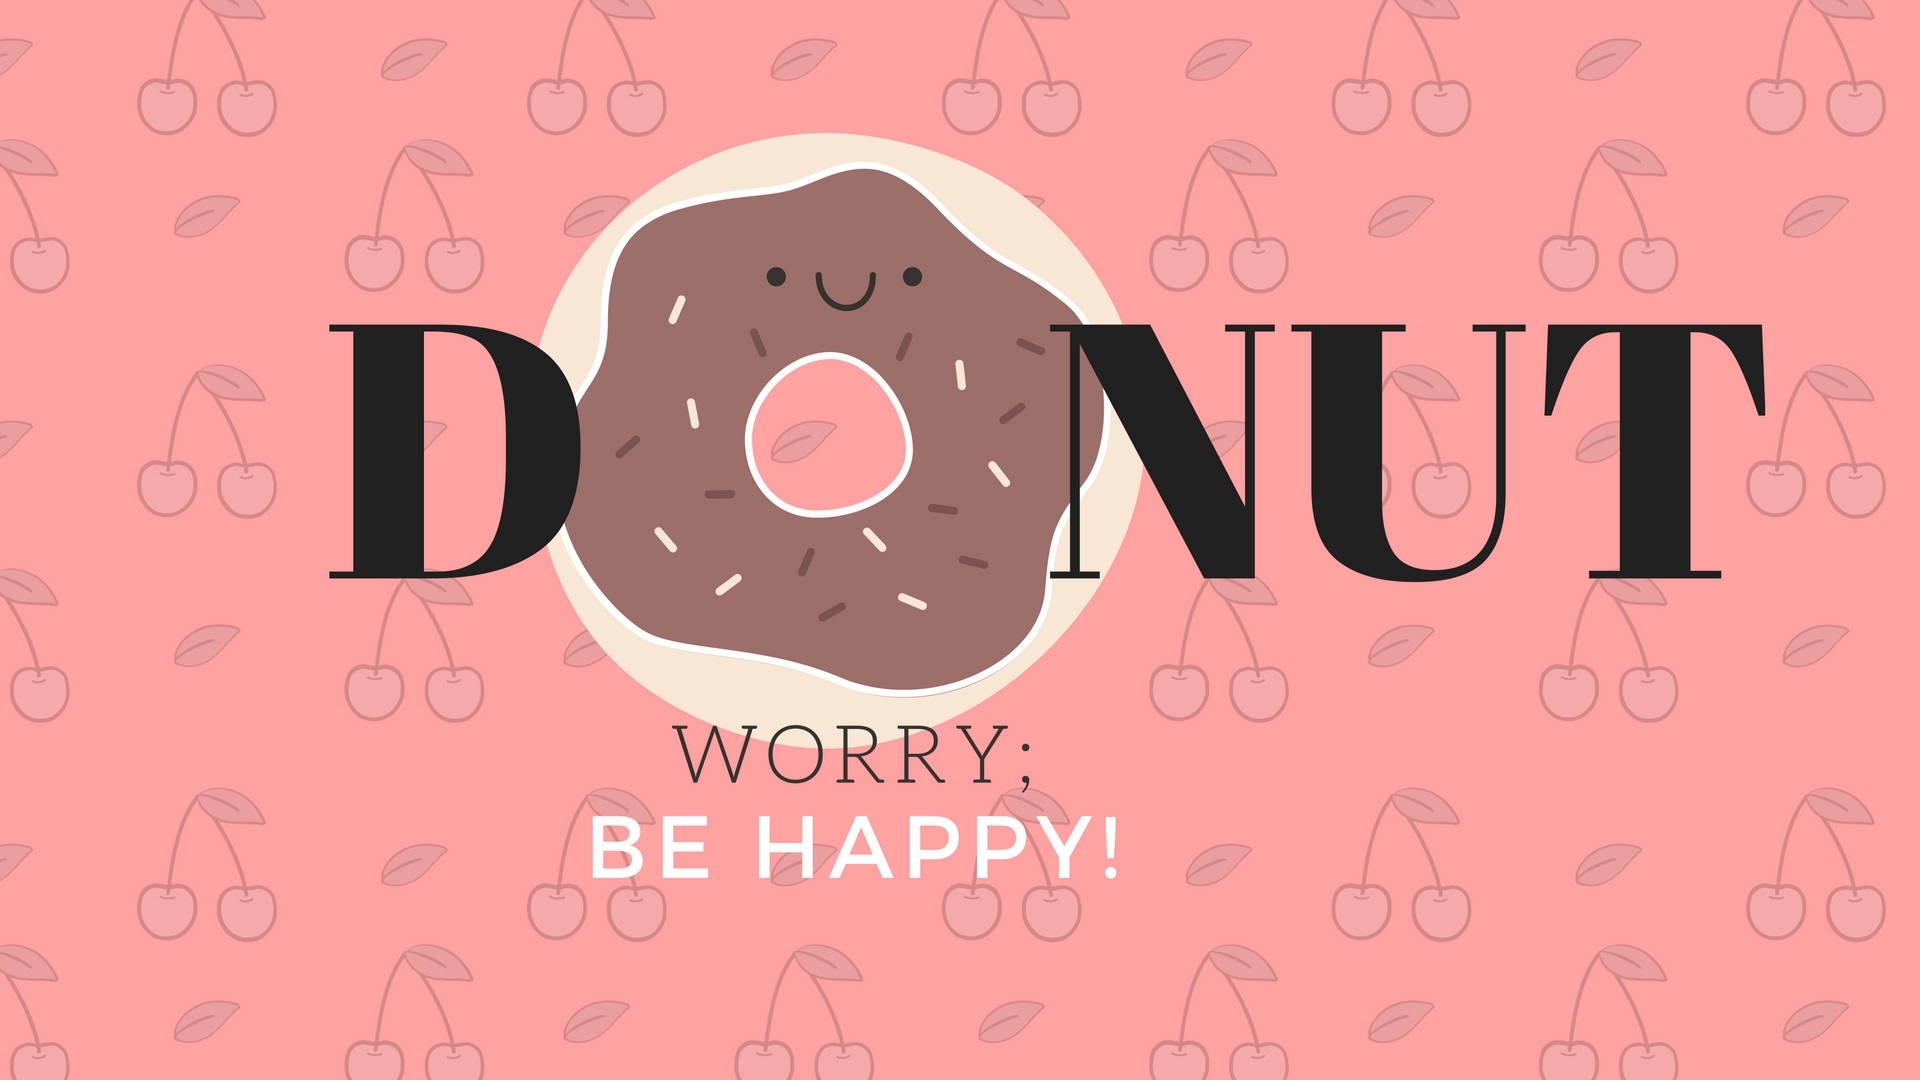 Donut Wallpaper Images  Free Download on Freepik